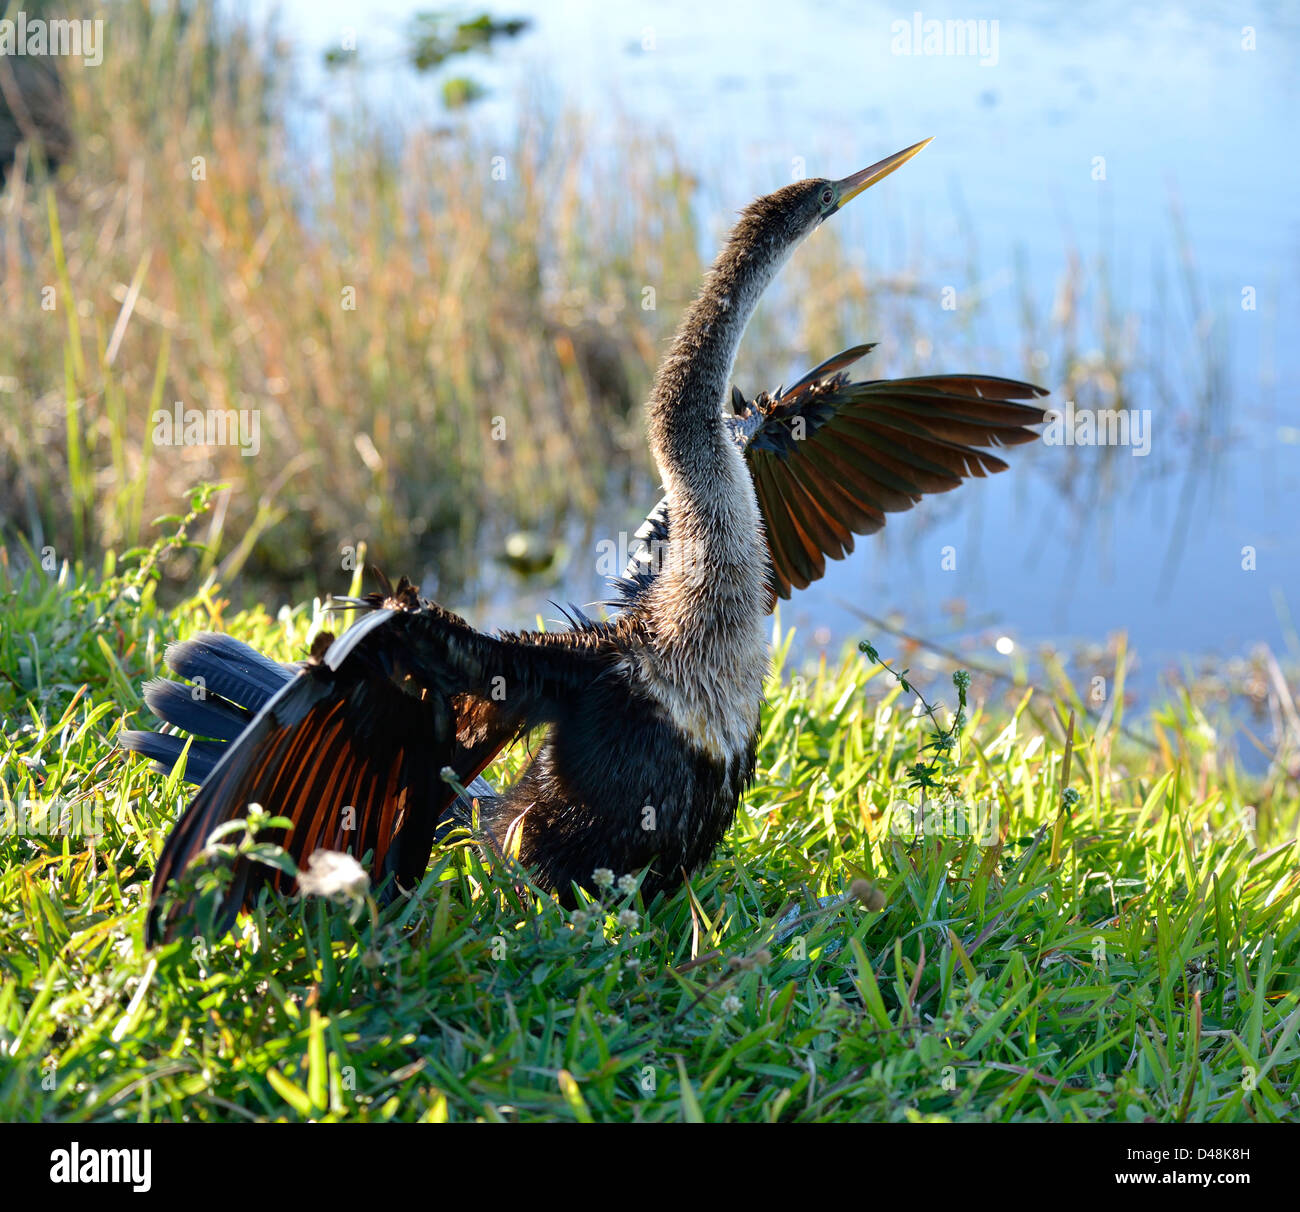 Amerikanische Anhinga Vogel auf dem Rasen Stockfoto